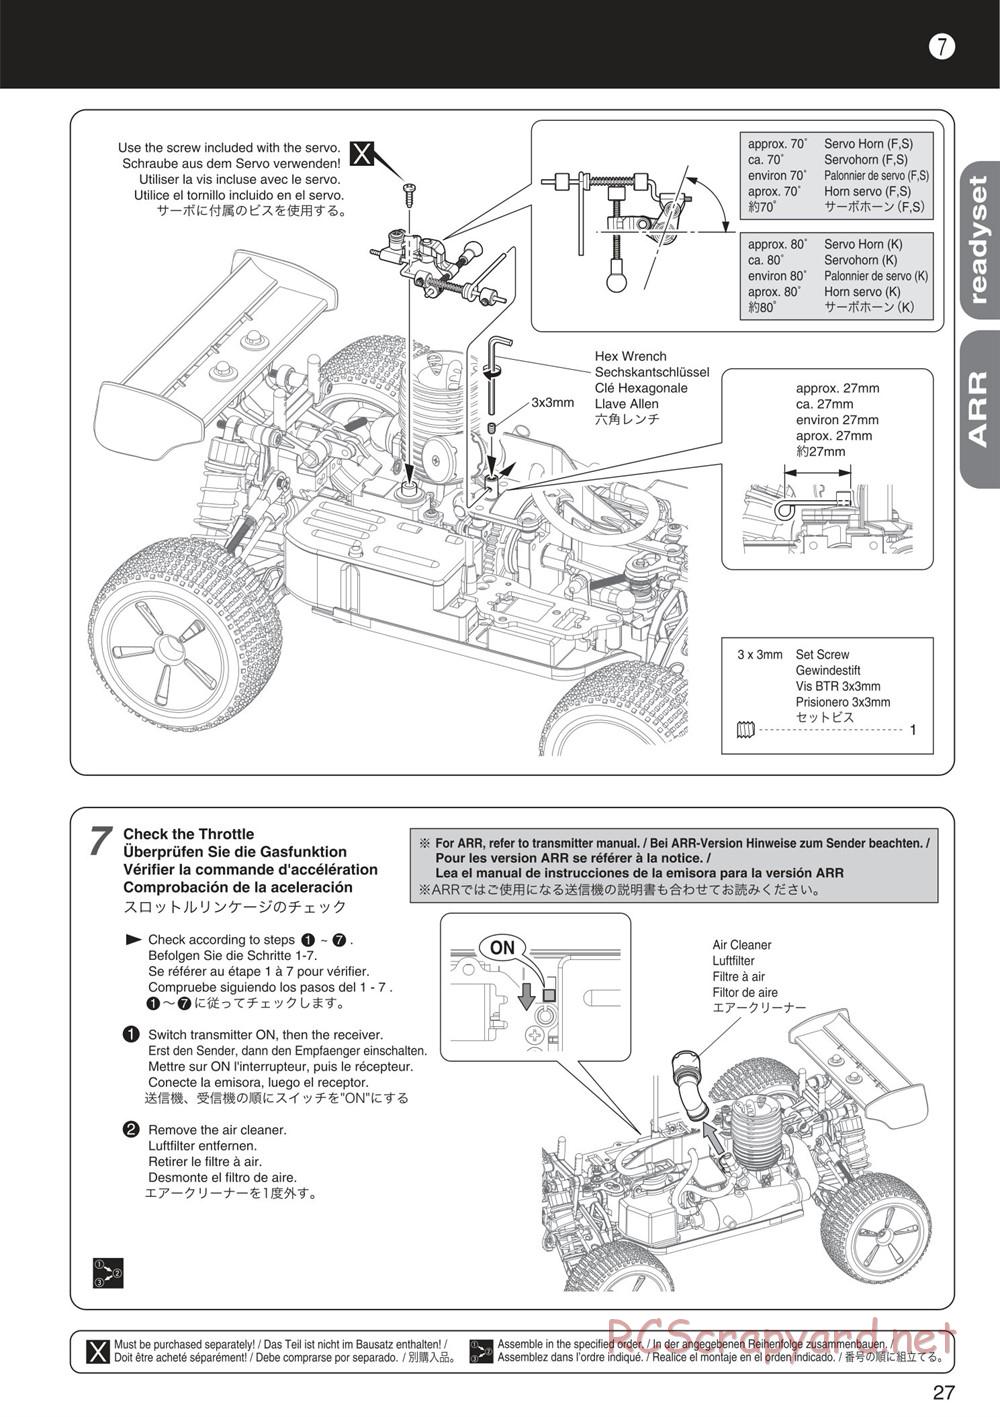 Kyosho - Mini Inferno ST 09 - Manual - Page 27